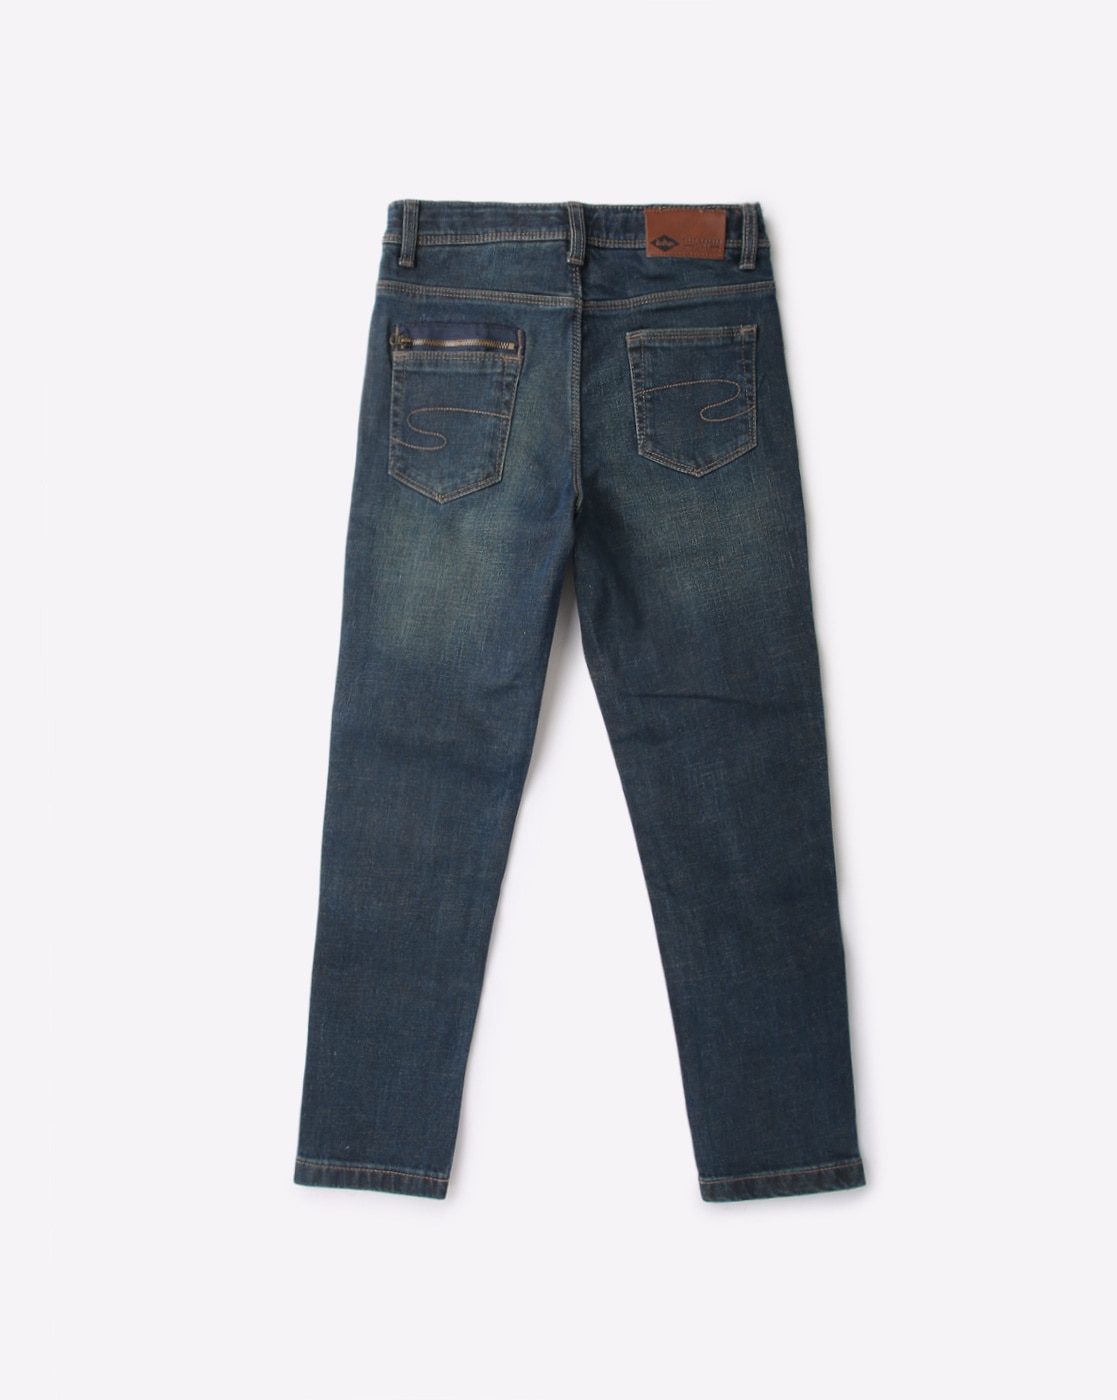 Jeans – Derby Clothing Pvt. Ltd.